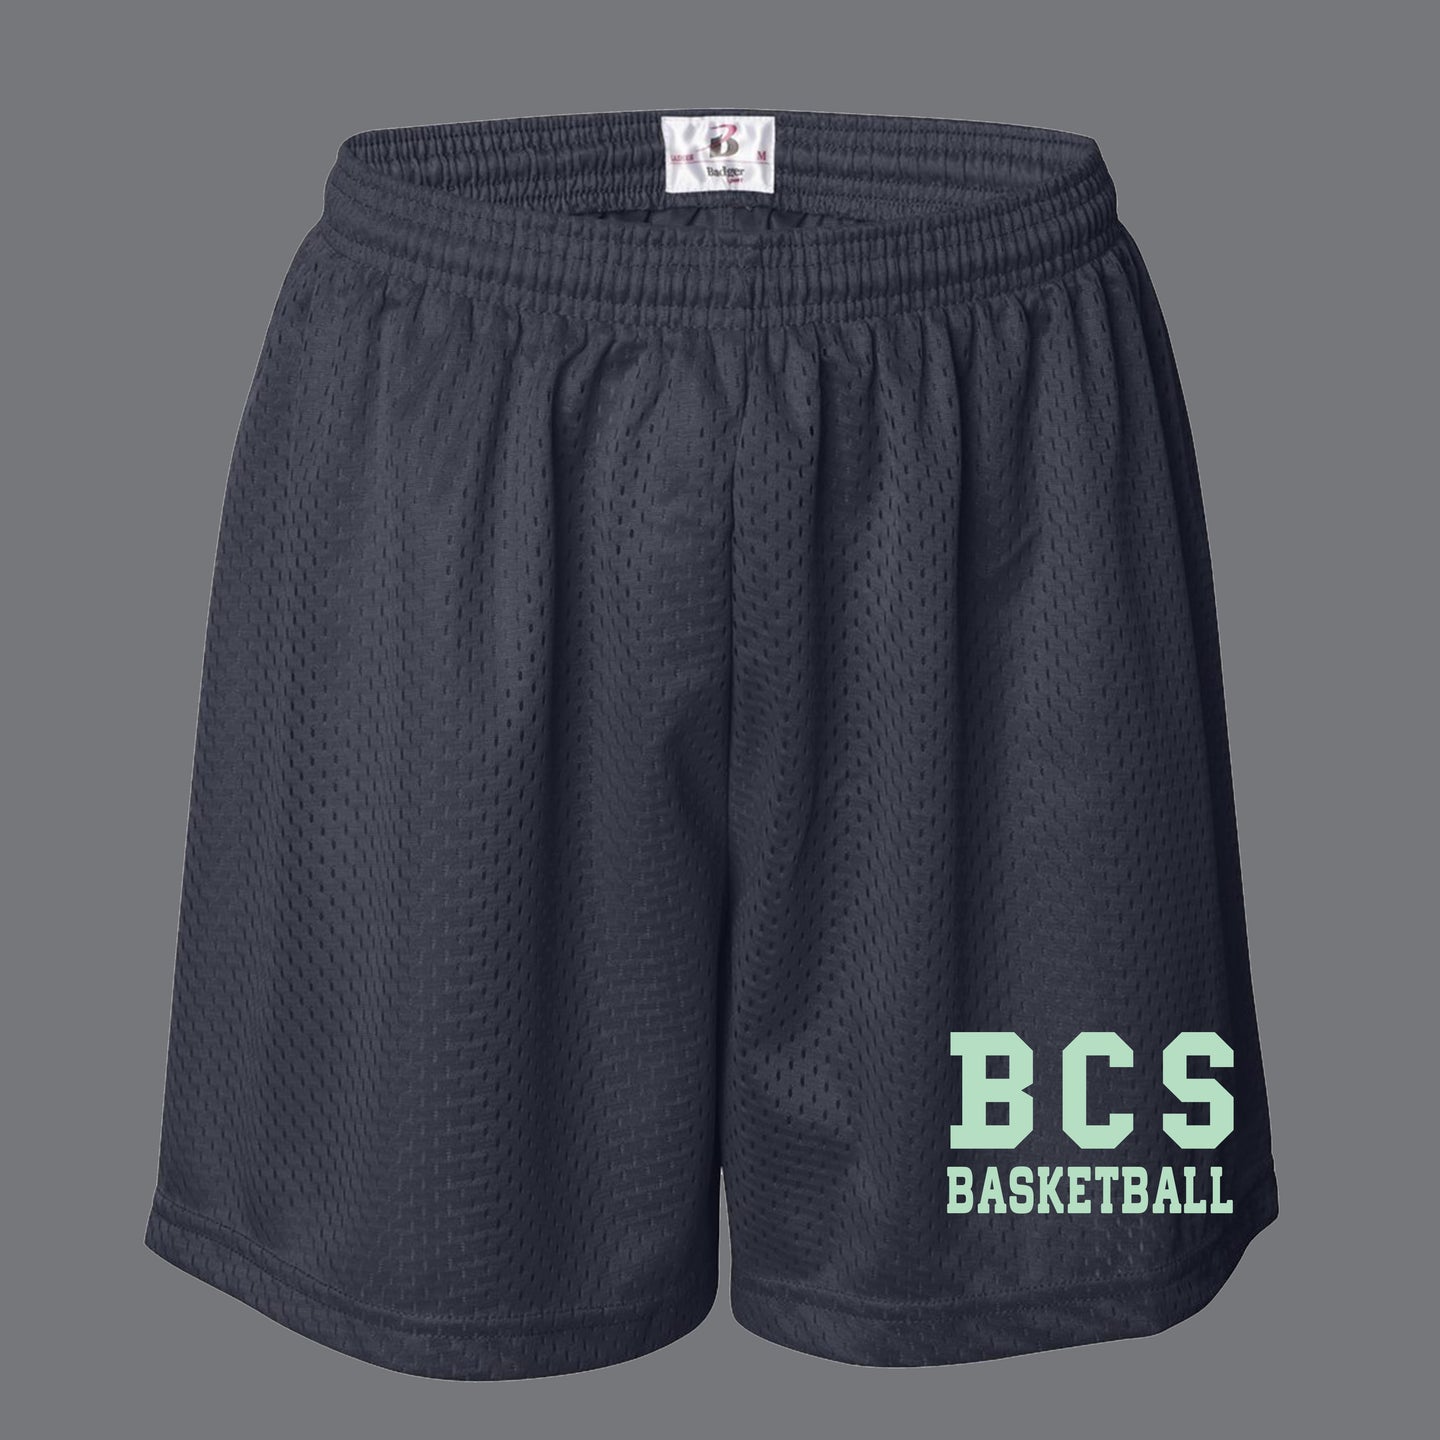 Bethany Christian School - BCS Woman Basketball Shorts